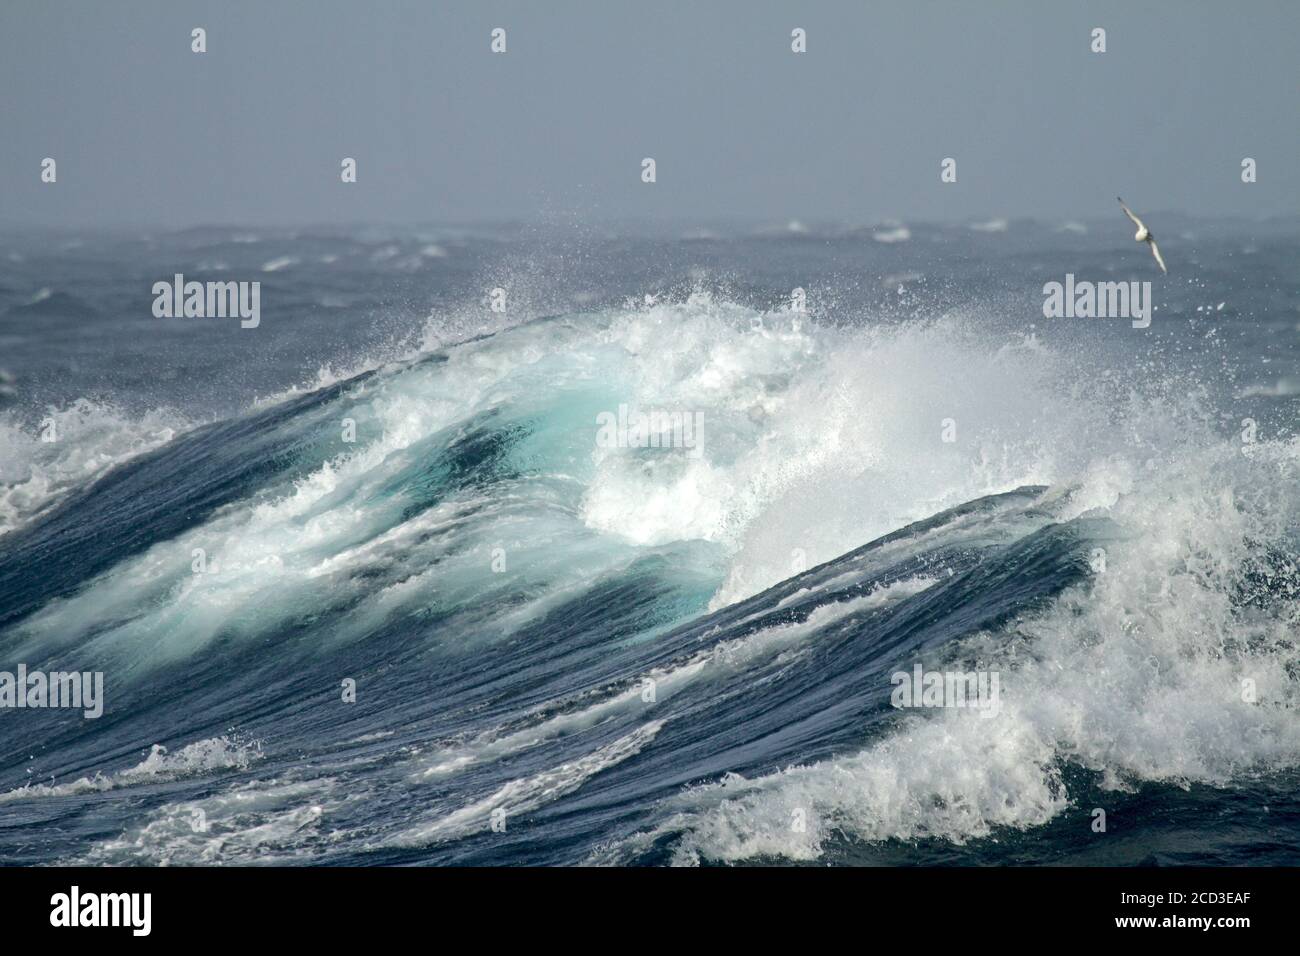 Huge ocean wave north of Antarctica. With seabird flying above the wave., Antarctica Stock Photo